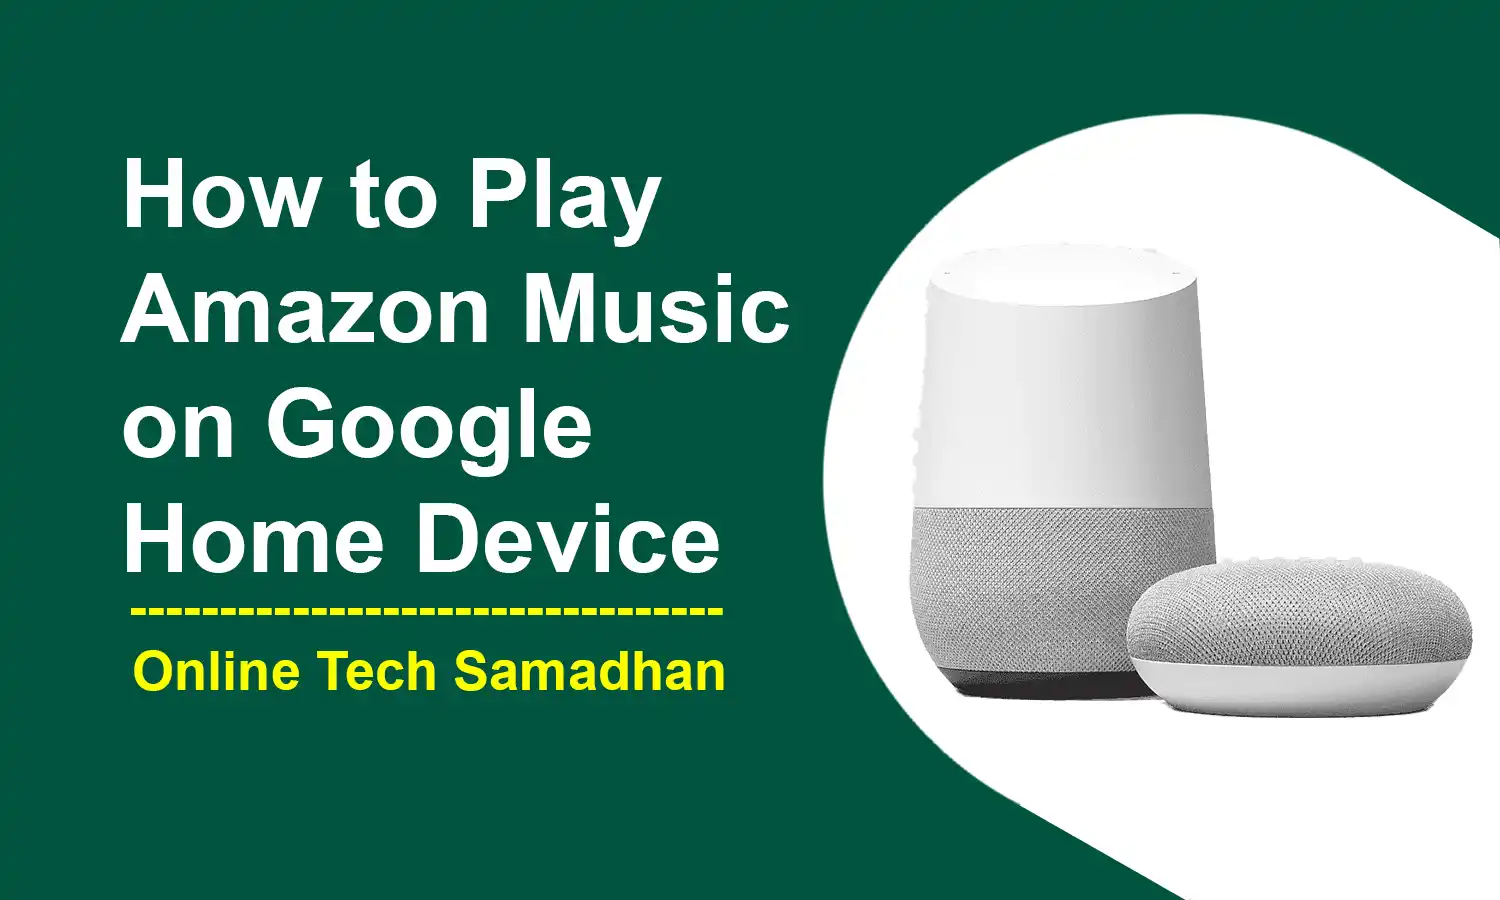 Play Amazon Music on Google Home